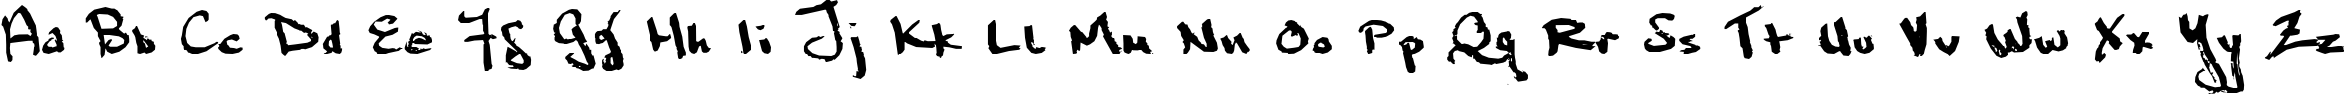 Пример написания английского алфавита шрифтом Marcusia